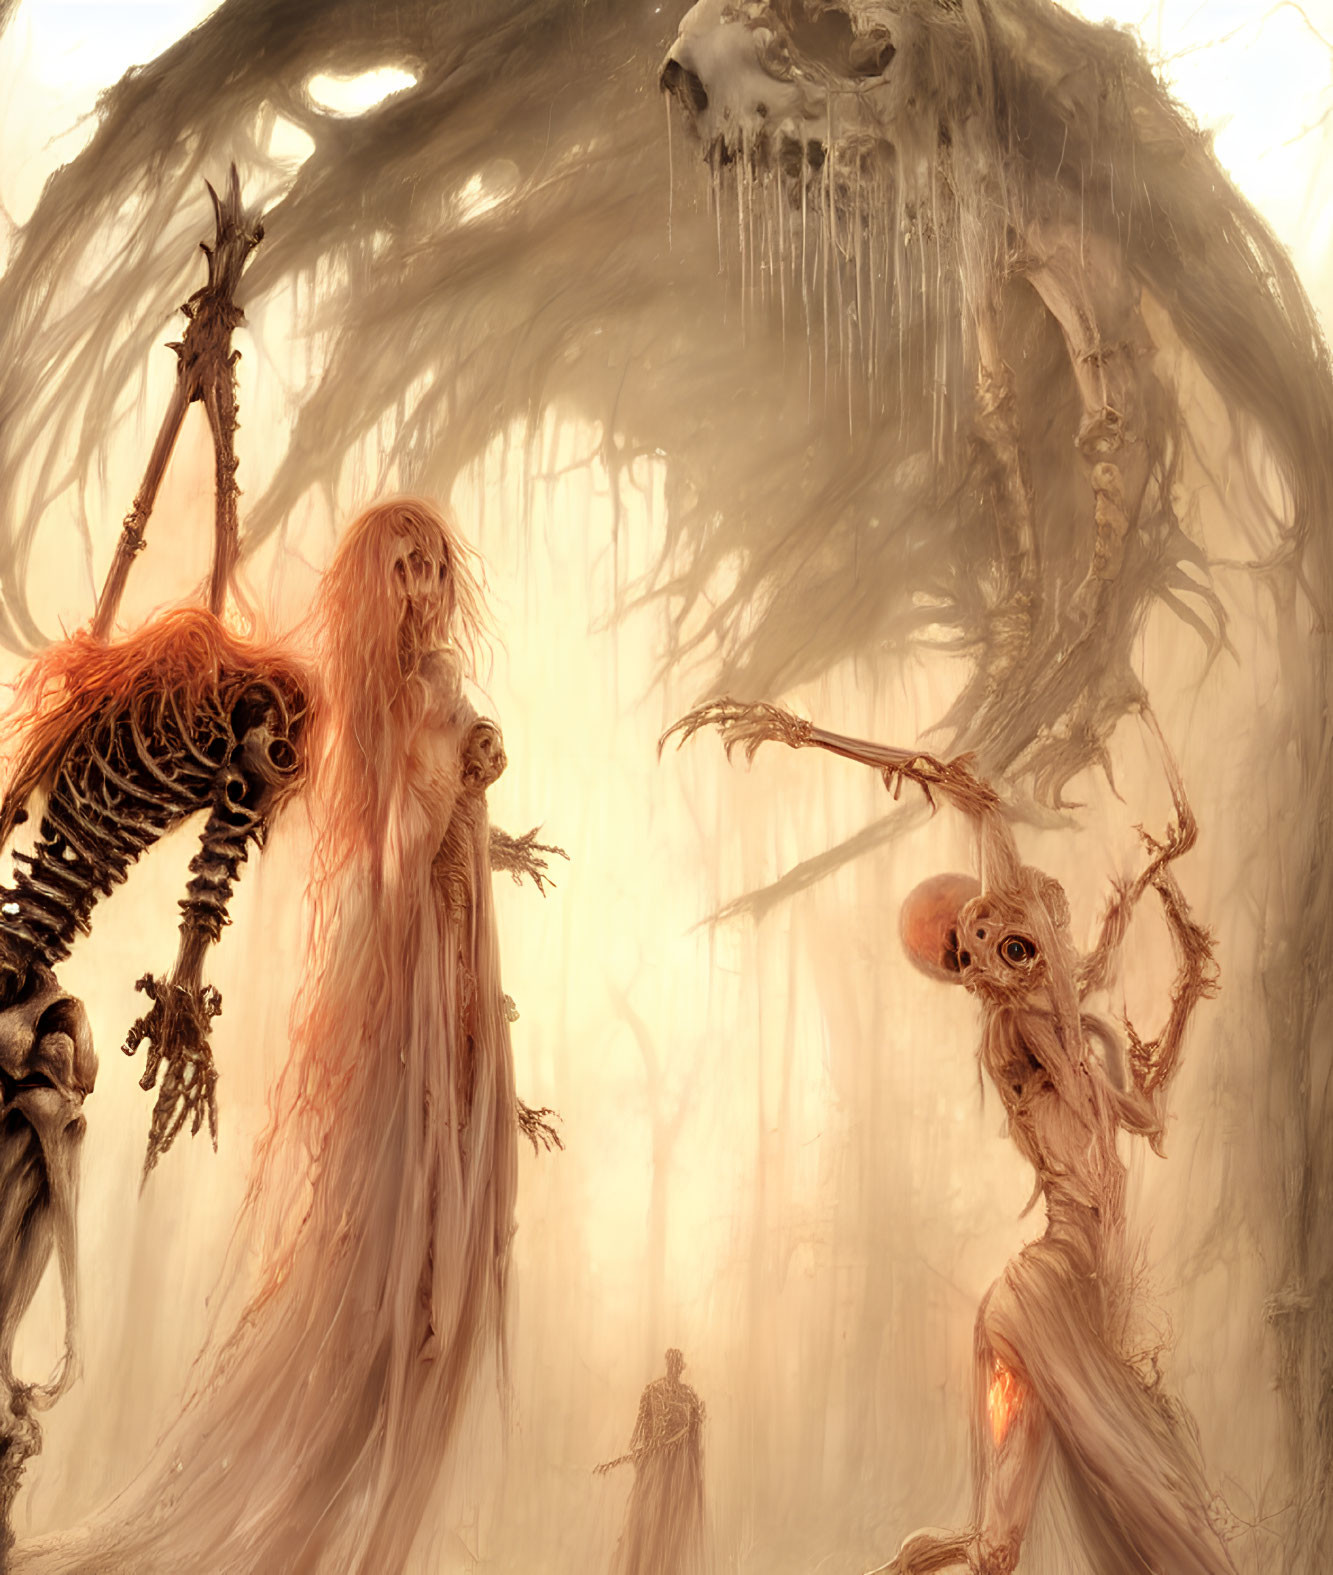 Eerie humanoid creatures with skeletal features in misty forest